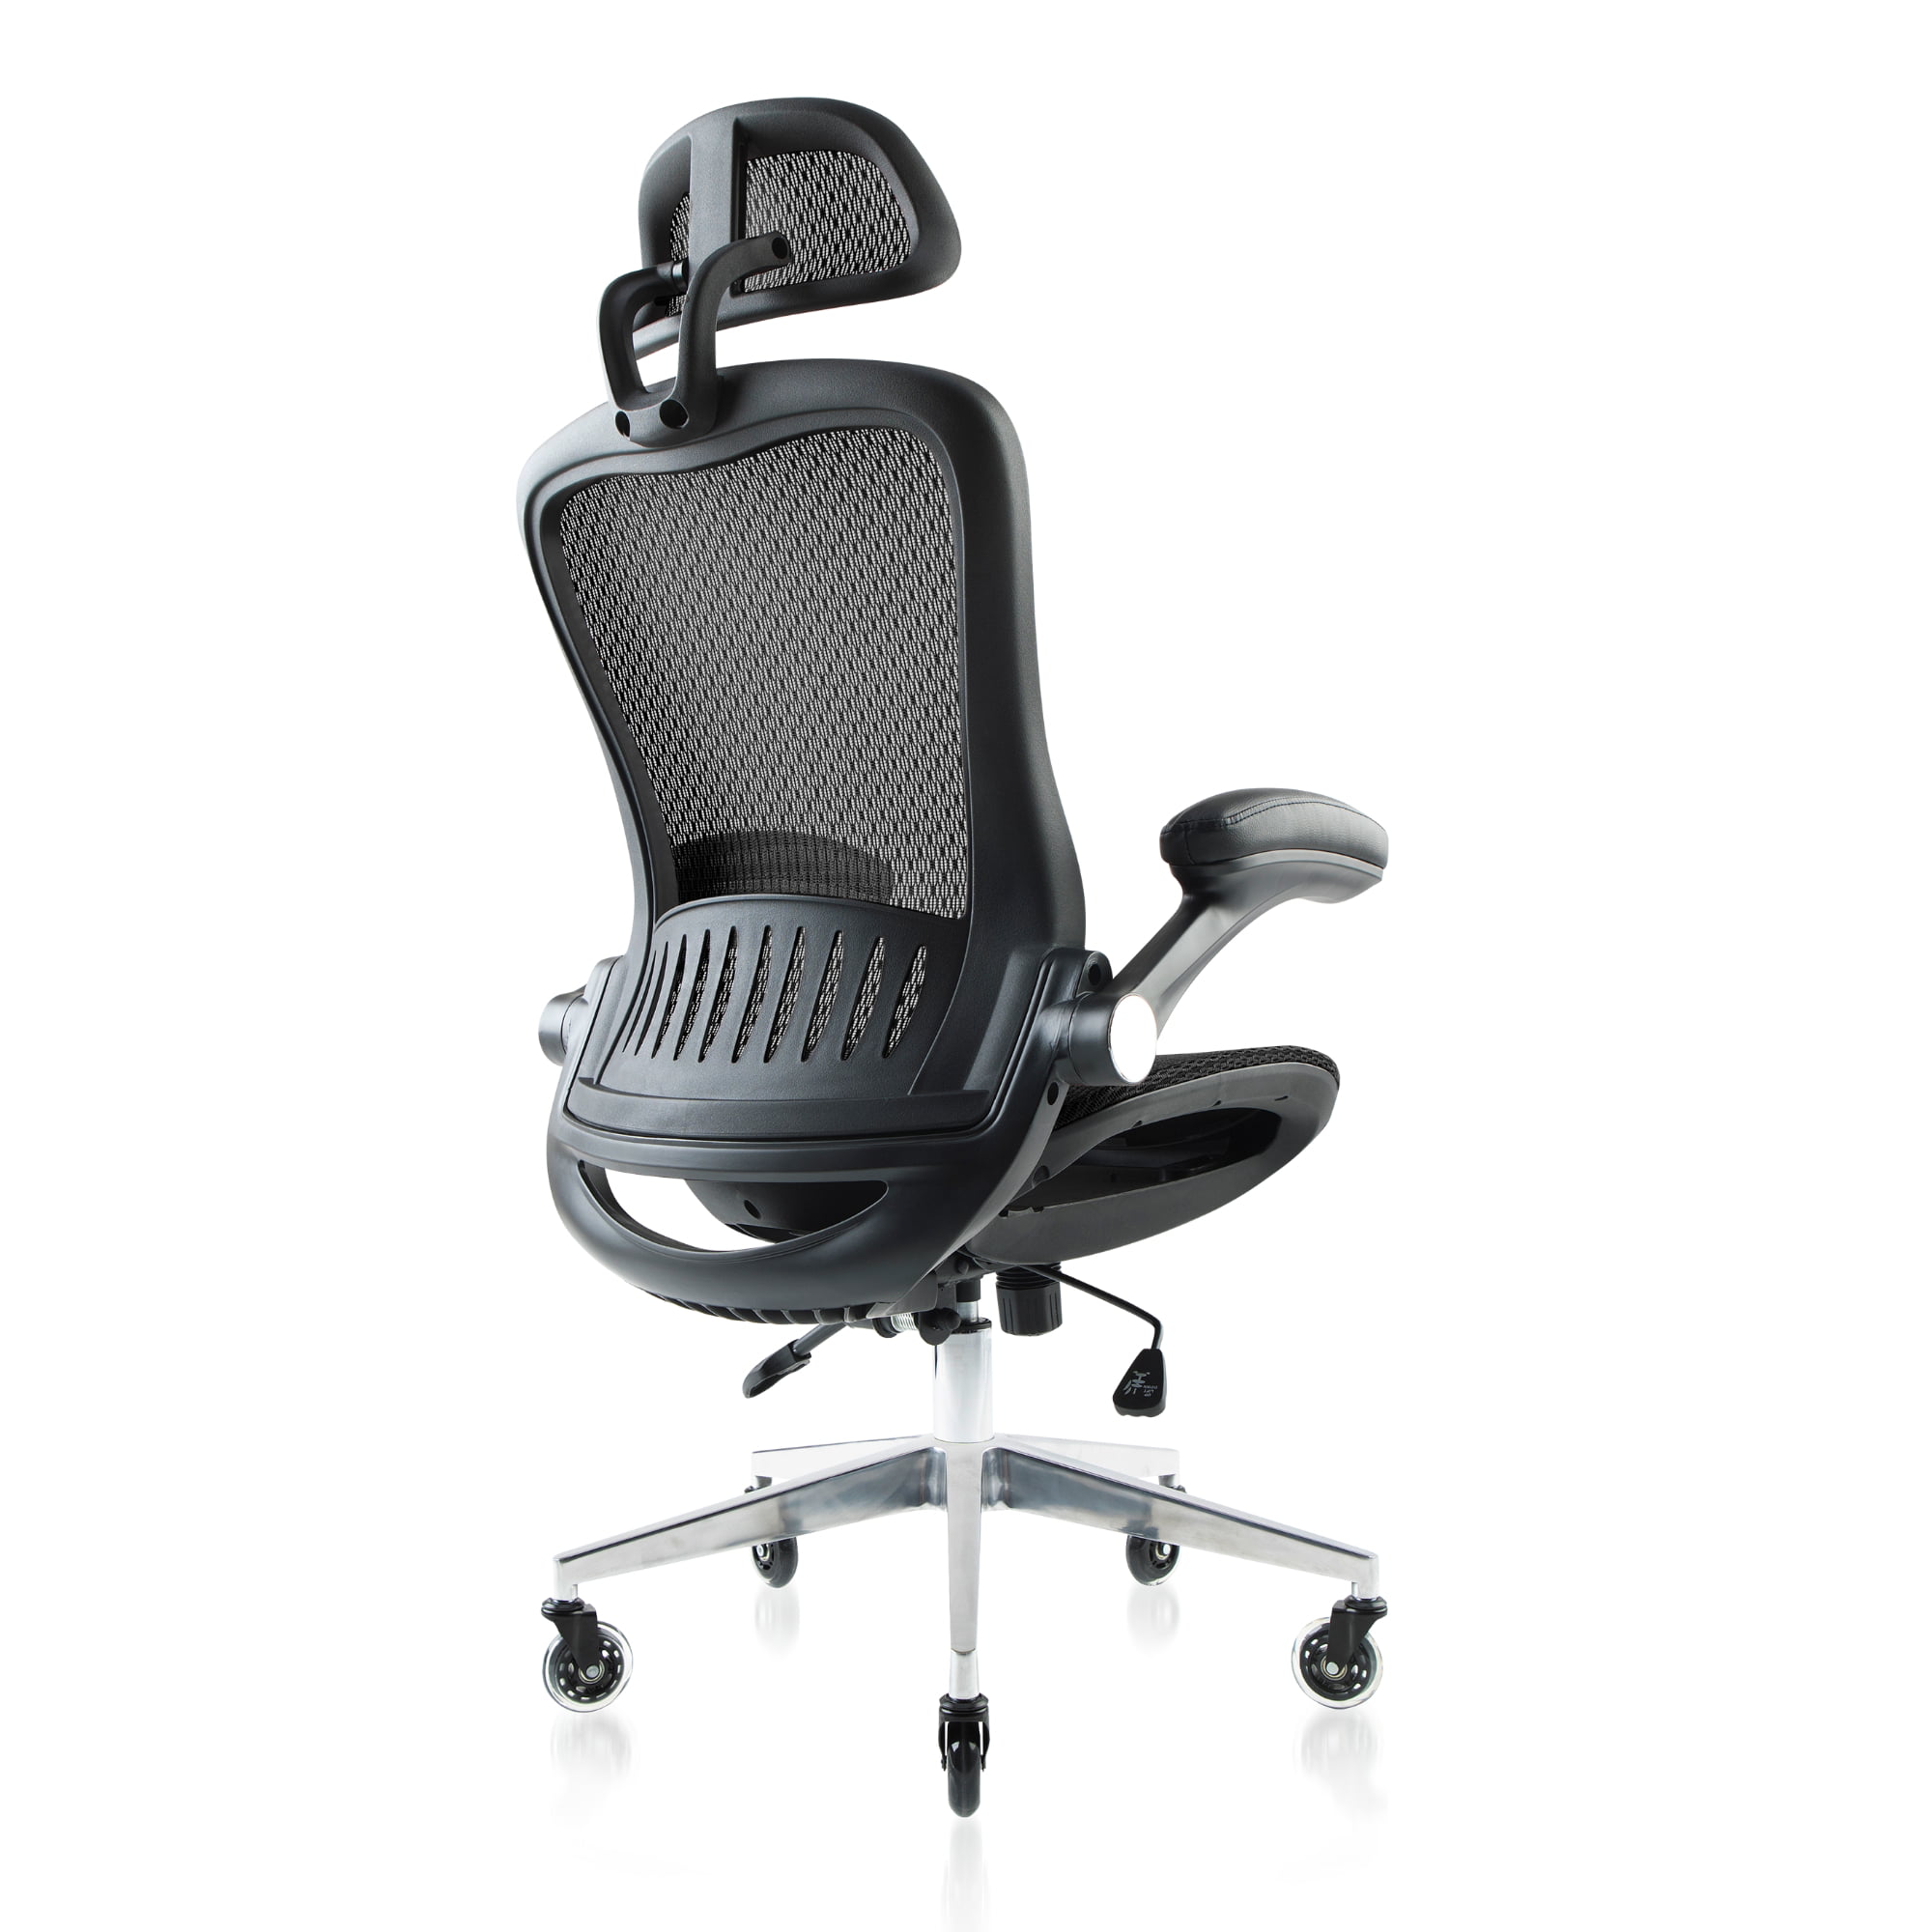 Durrafy Office Chair Ergonomic, Desk chair with 90Â° Flip-up